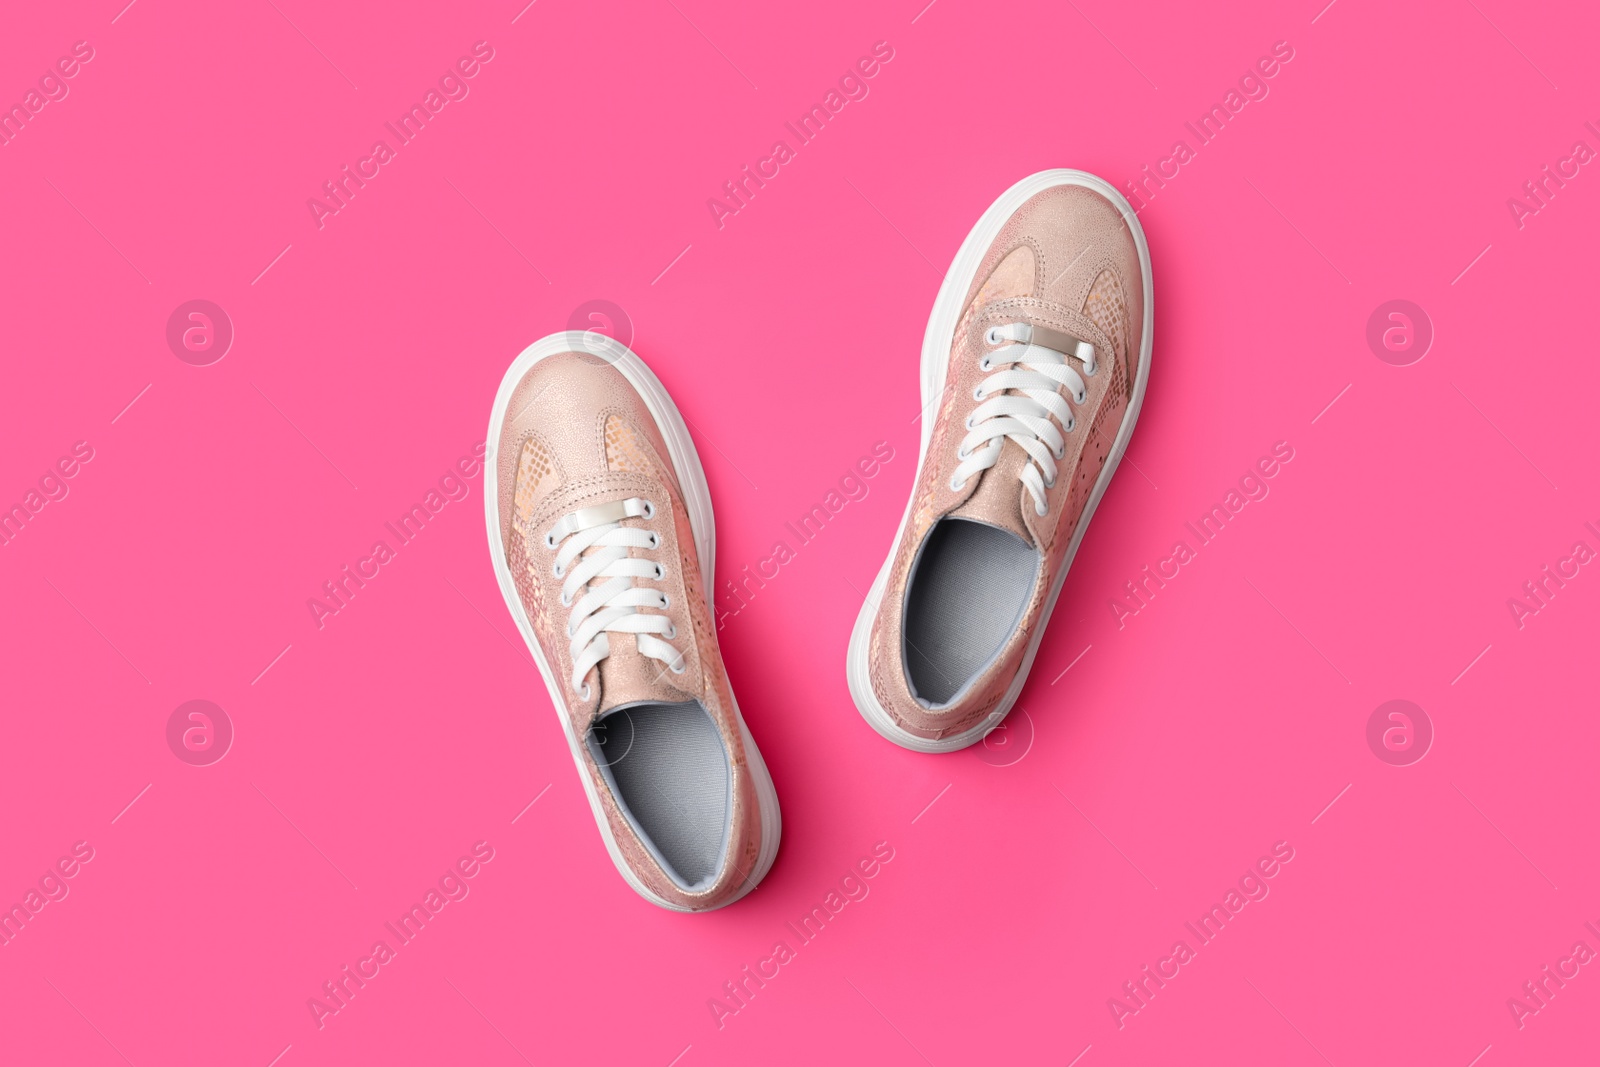 Photo of Stylish shoes on pink background, flat lay